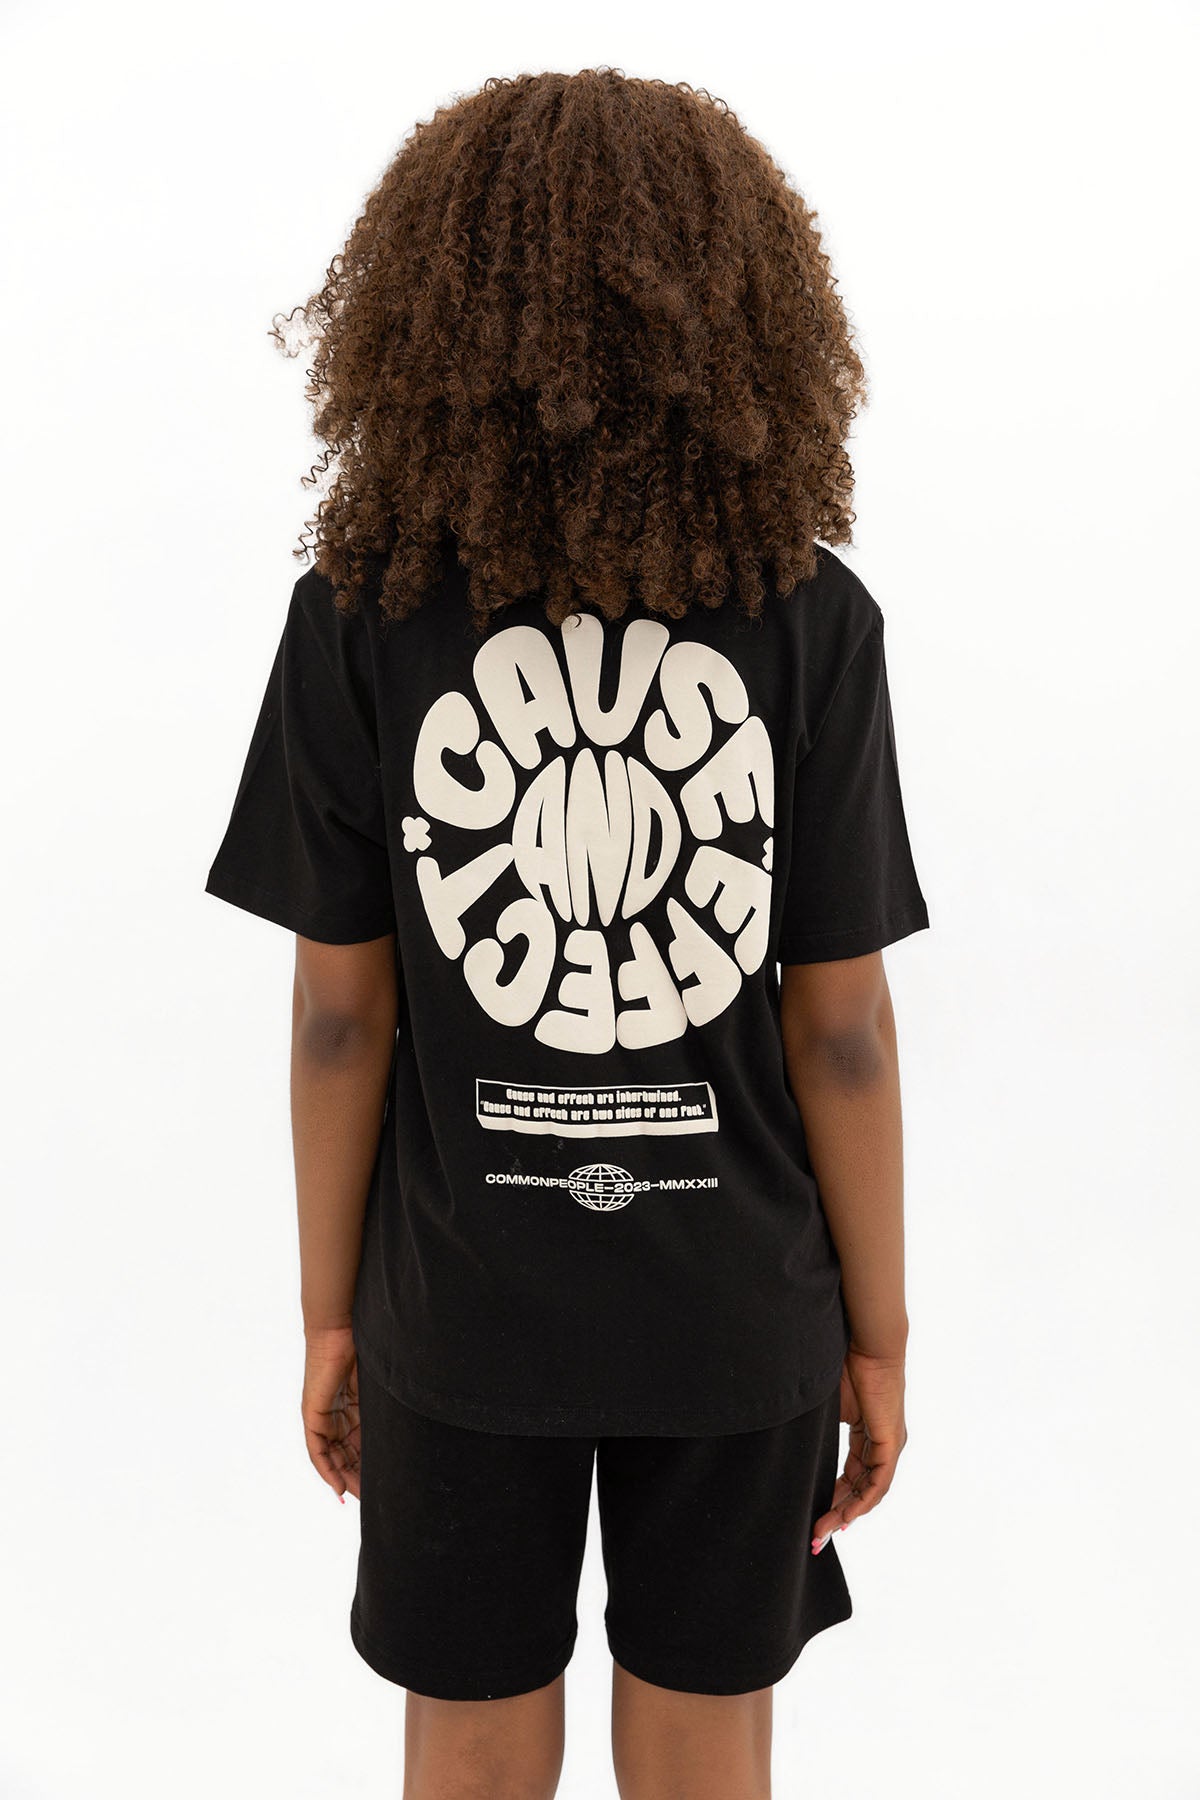 Cause & Effect - Black - Oversized T-shirt